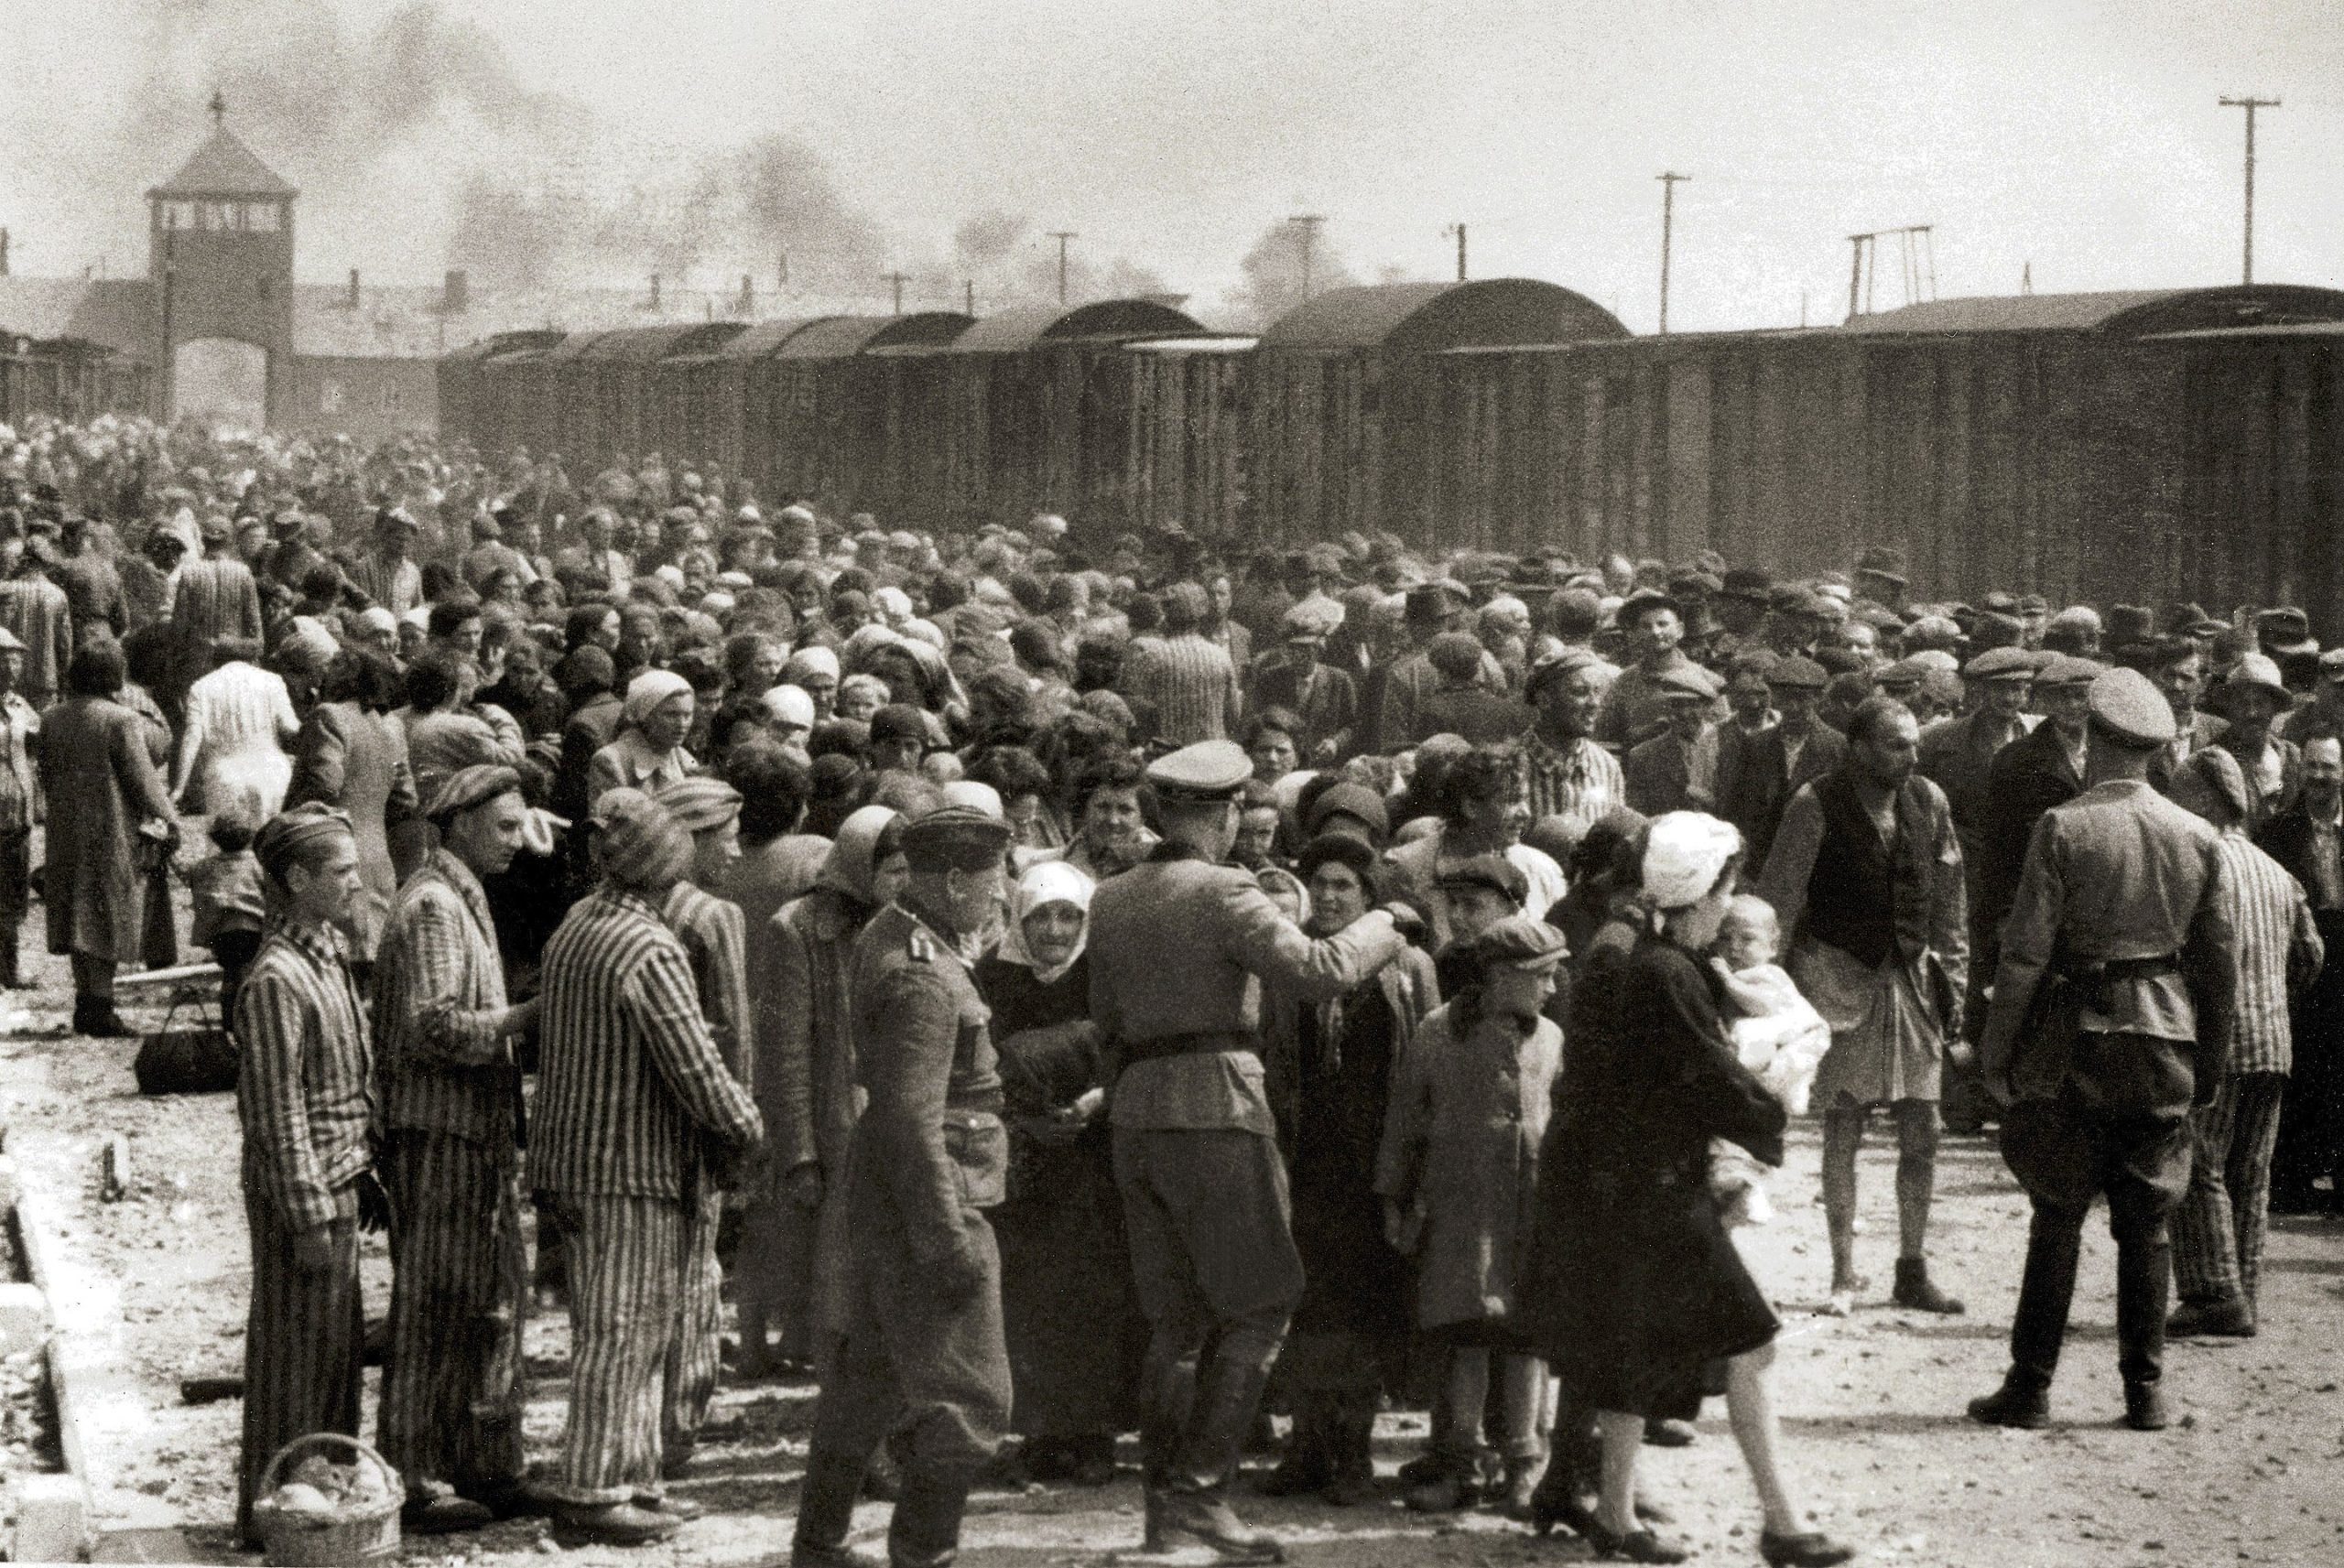 2880px-Selection_on_the_ramp_at_Auschwitz-Birkenau_1944_Auschwitz_Album_1a-scaled.jpg